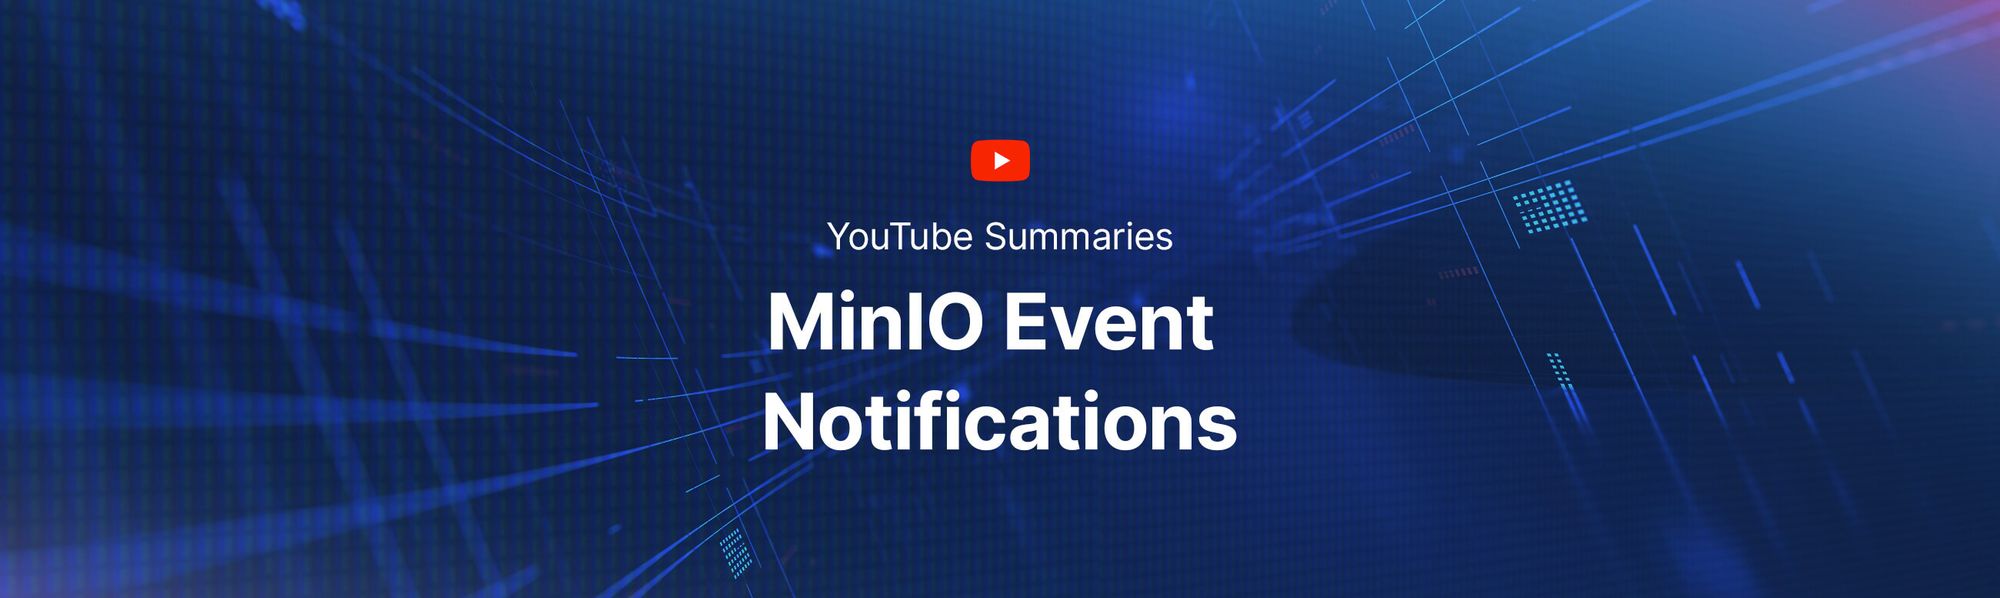 YouTube Summaries: MinIO Event Notifications